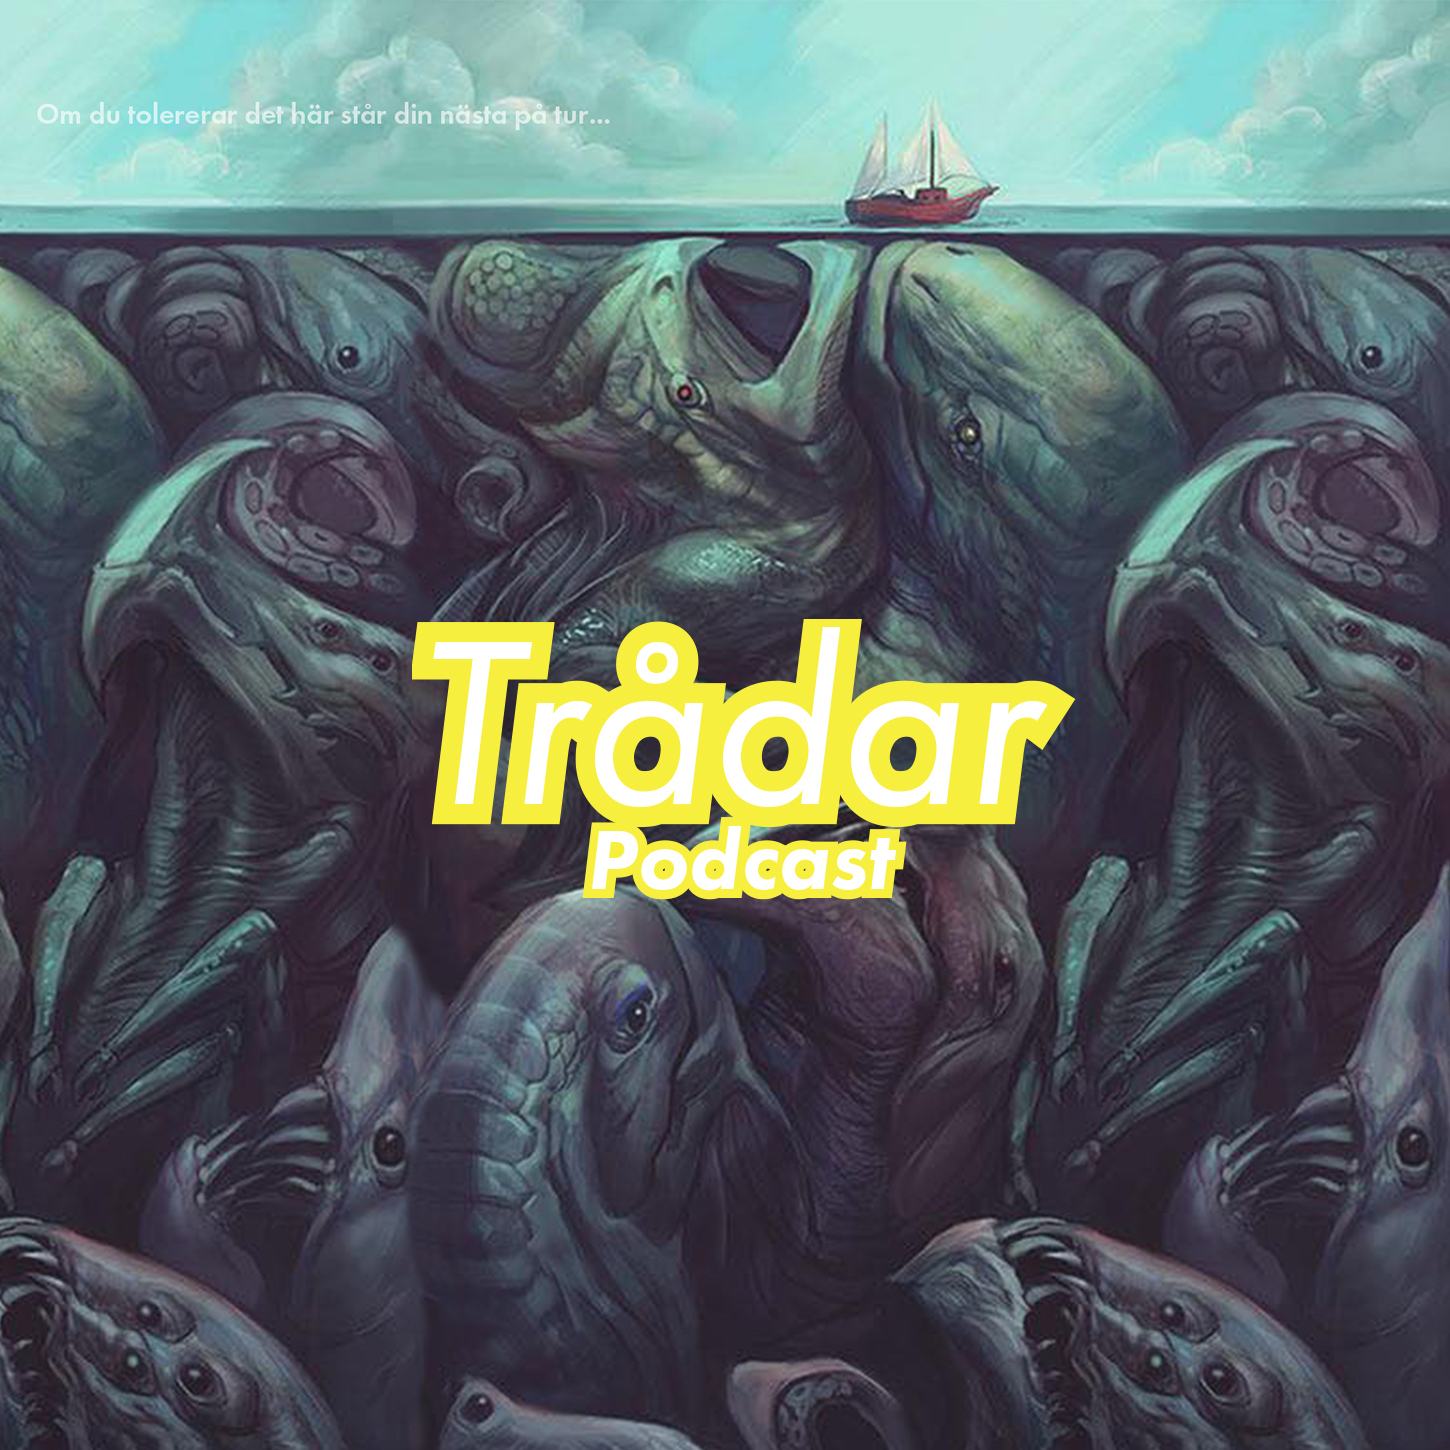 Trådar - Podcast